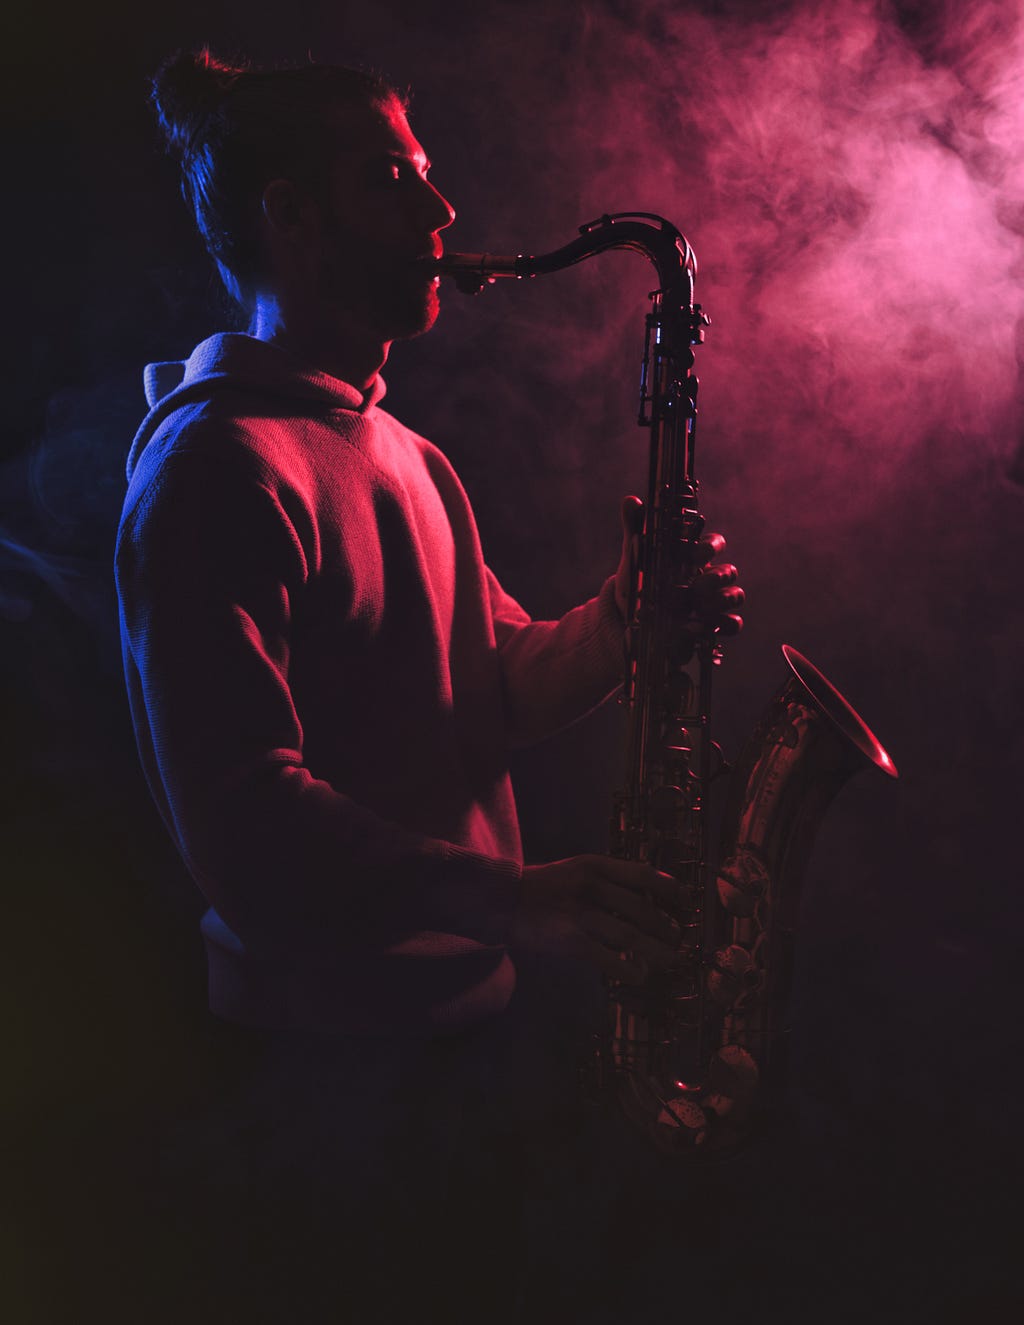 A man playing Saxophone in dark.